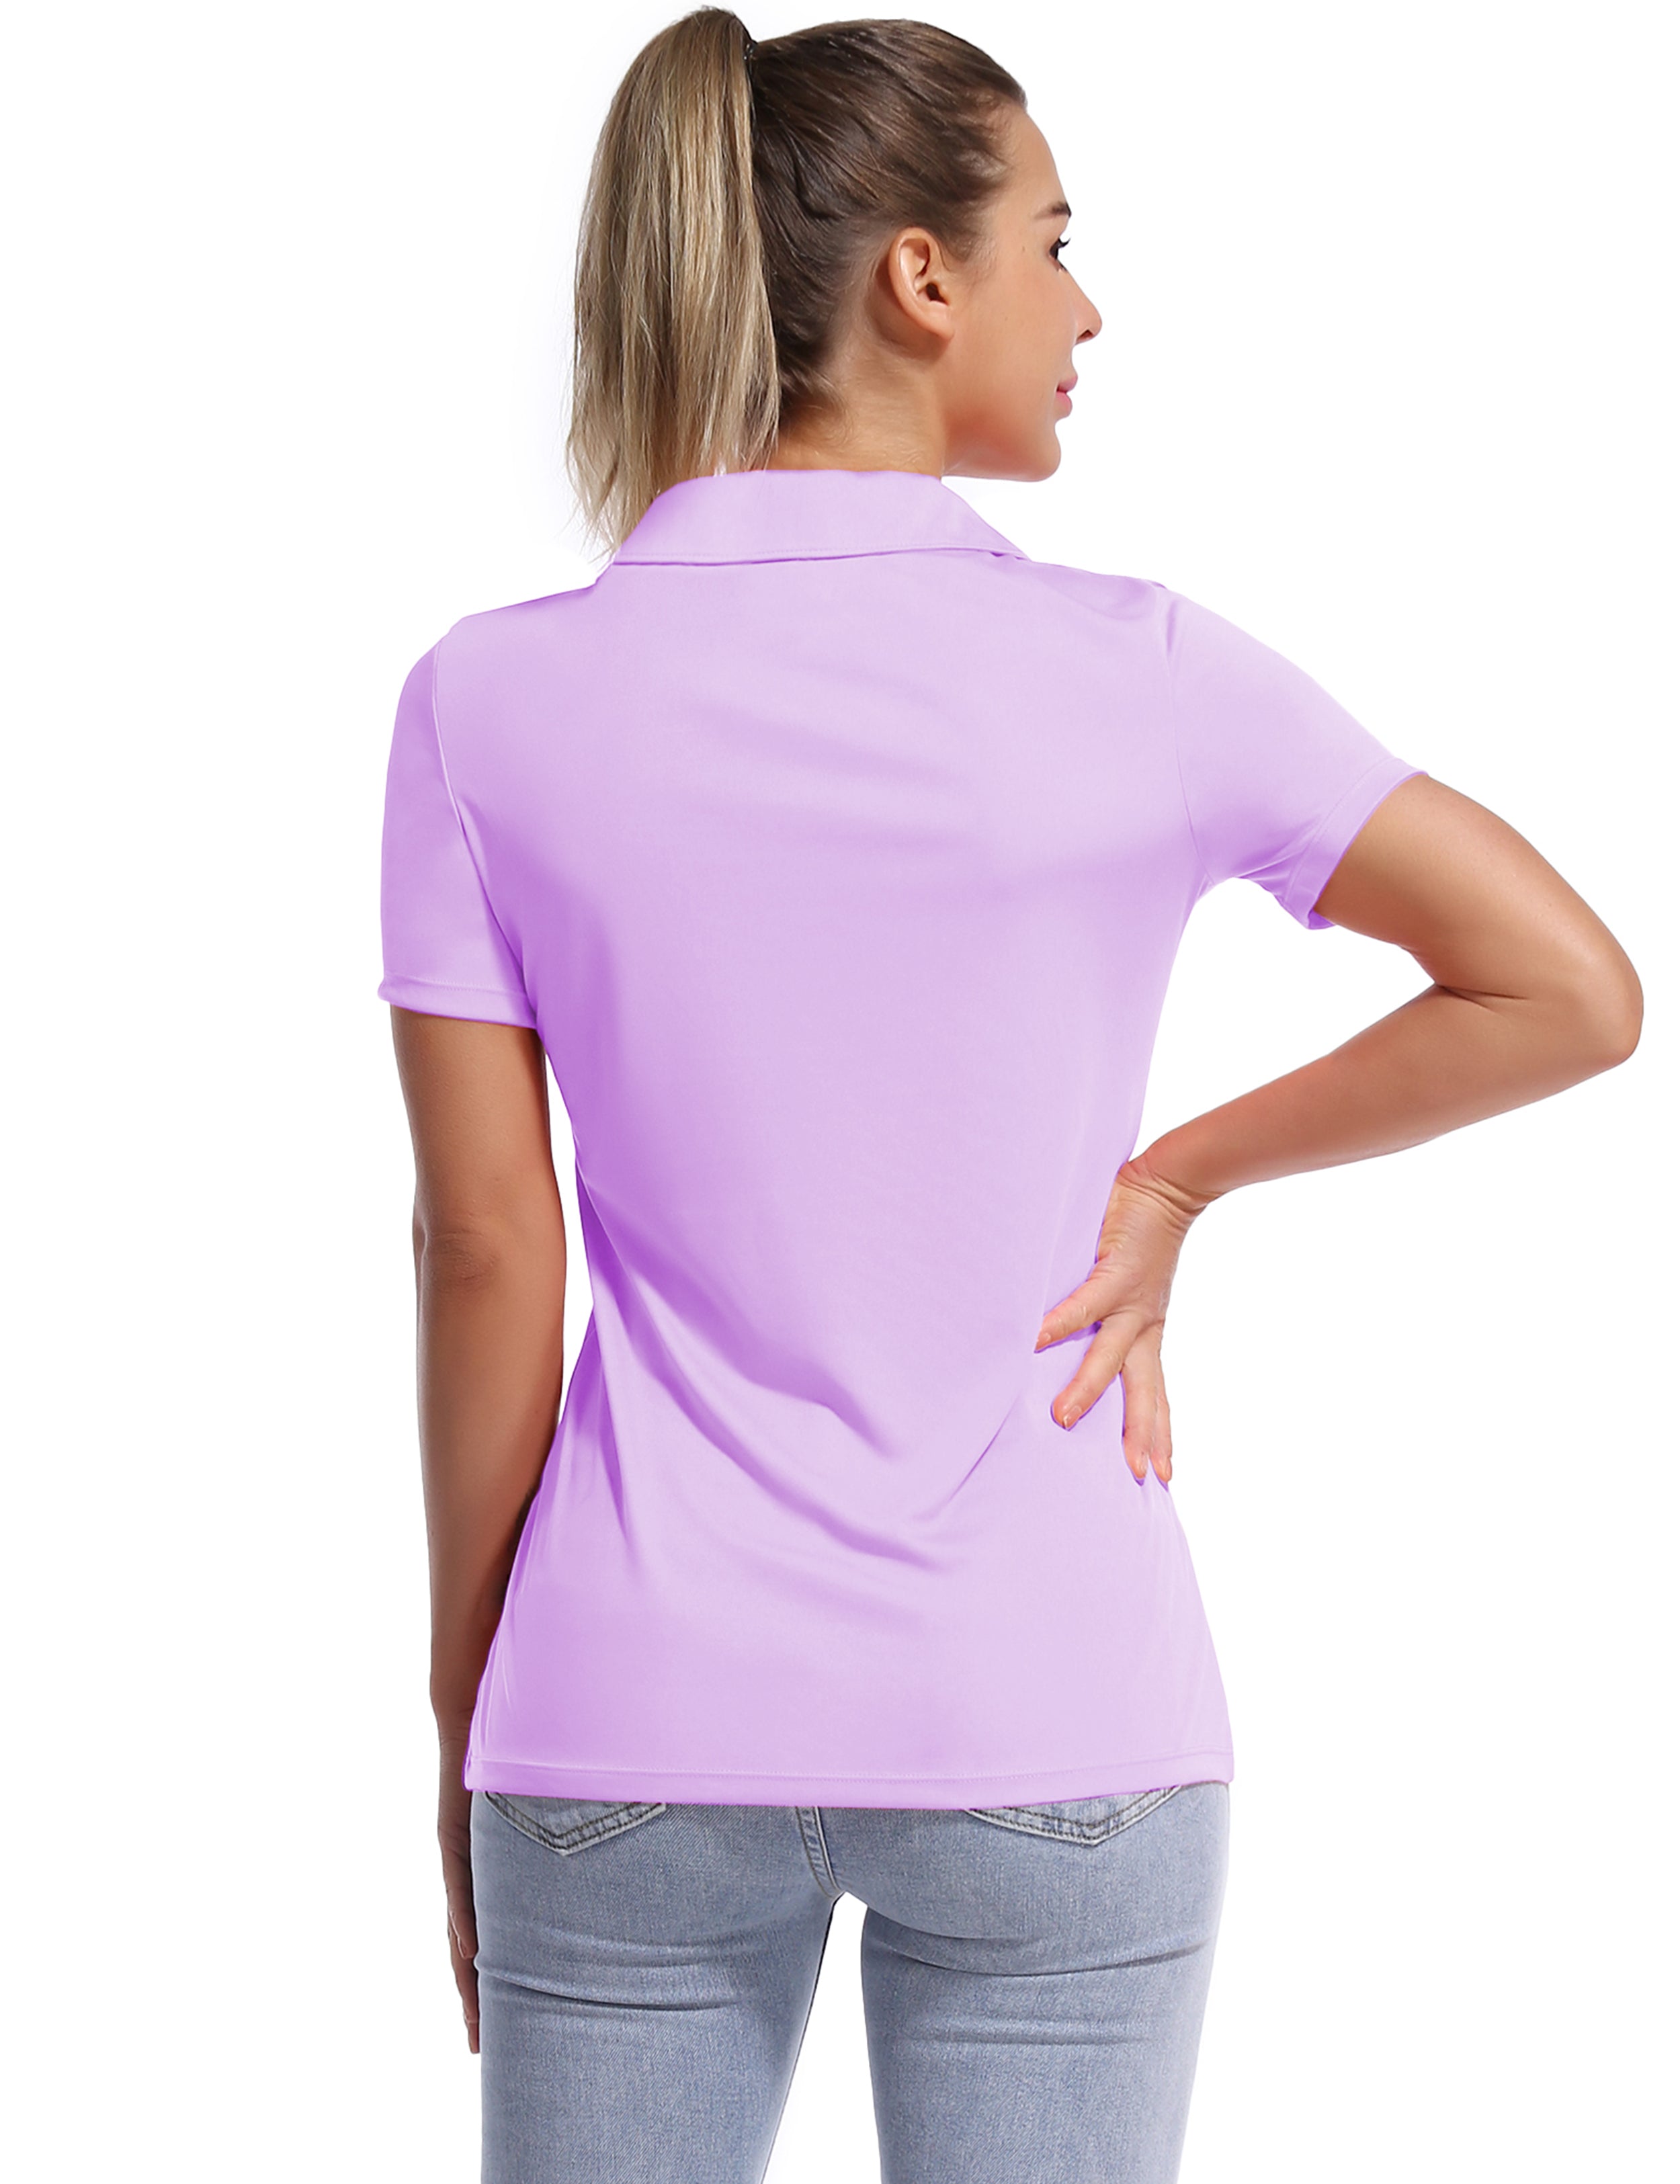 Short Sleeve Slim Fit Polo Shirt purple_Jogging